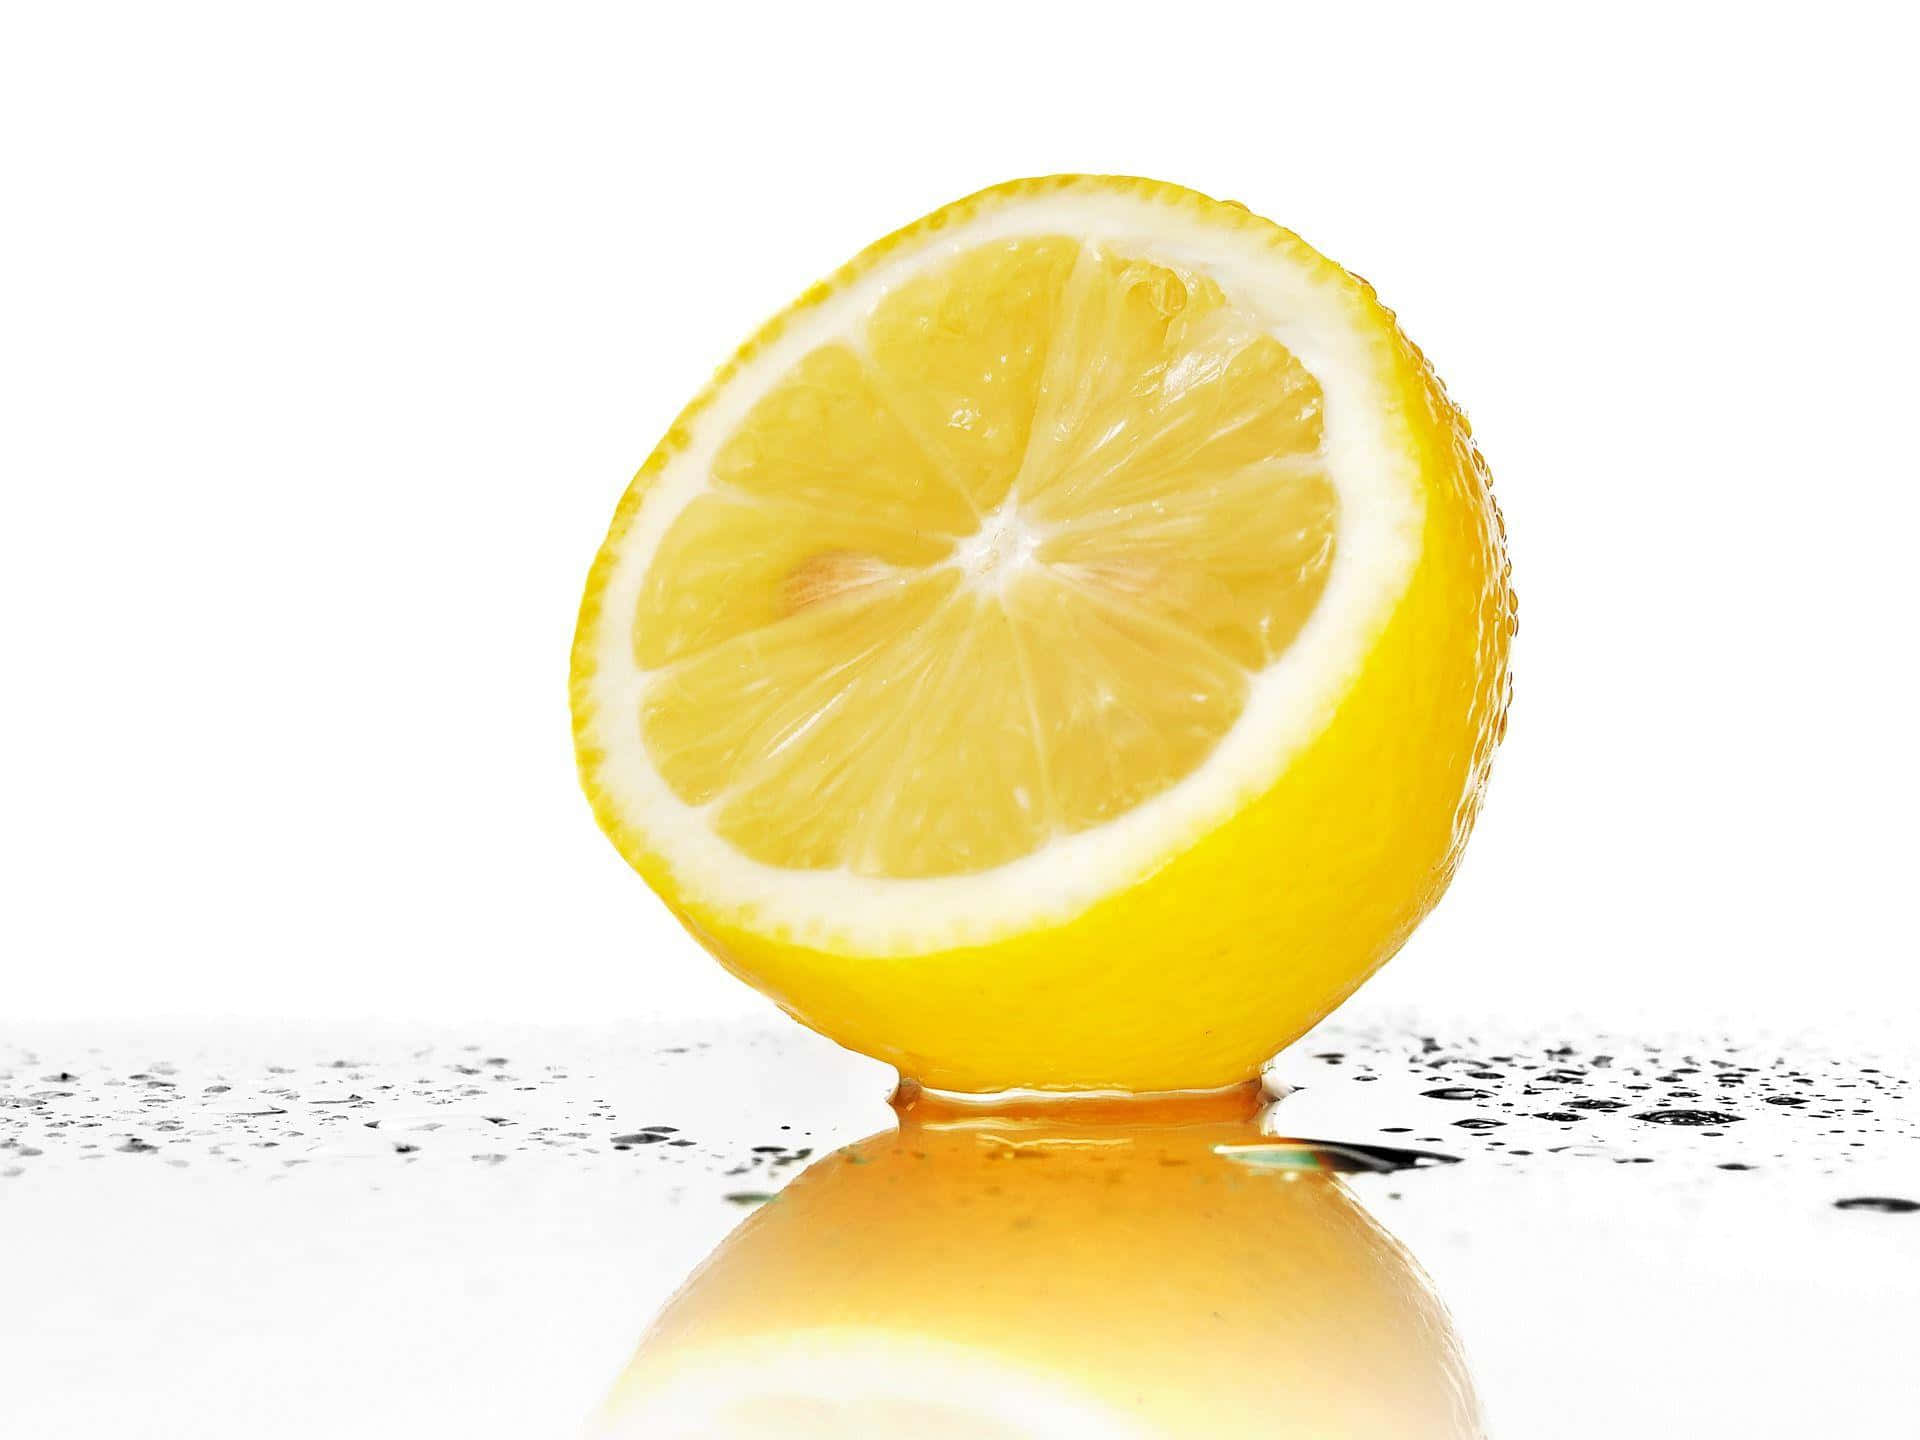 Slice of fresh lemon with leaves